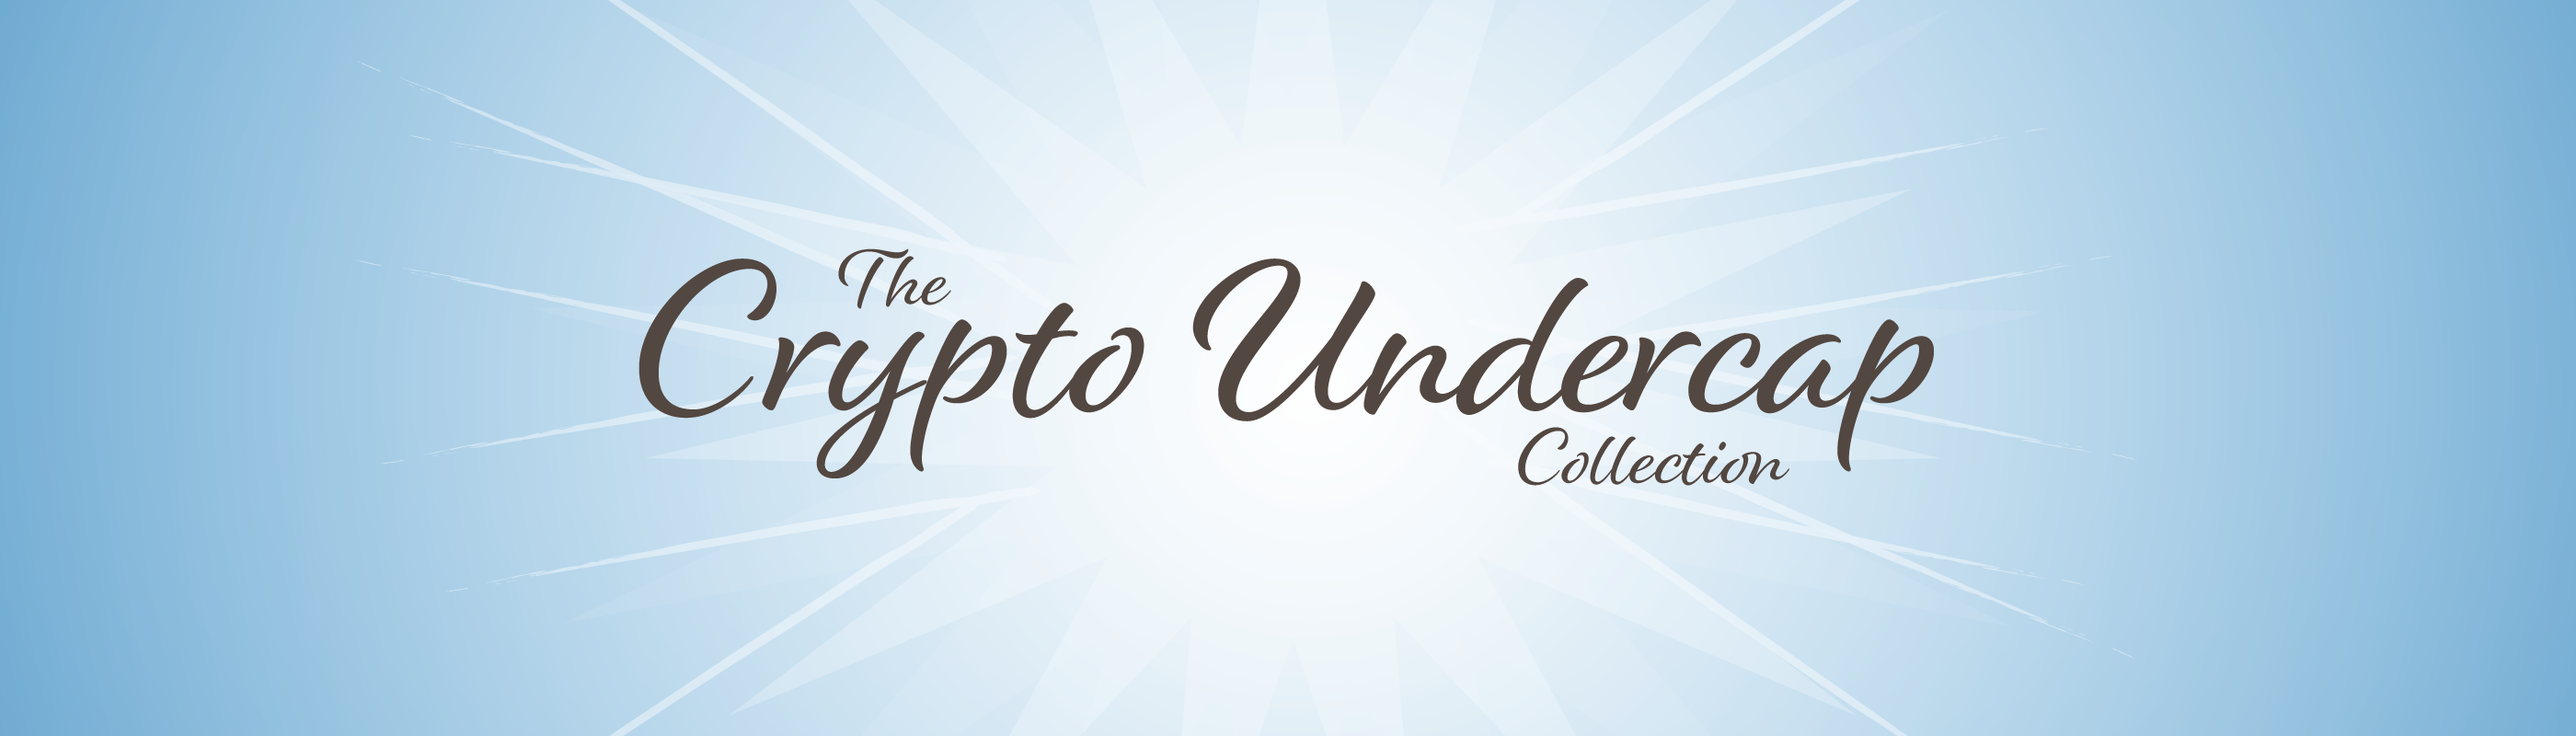 The Crypto Cap Undercaps